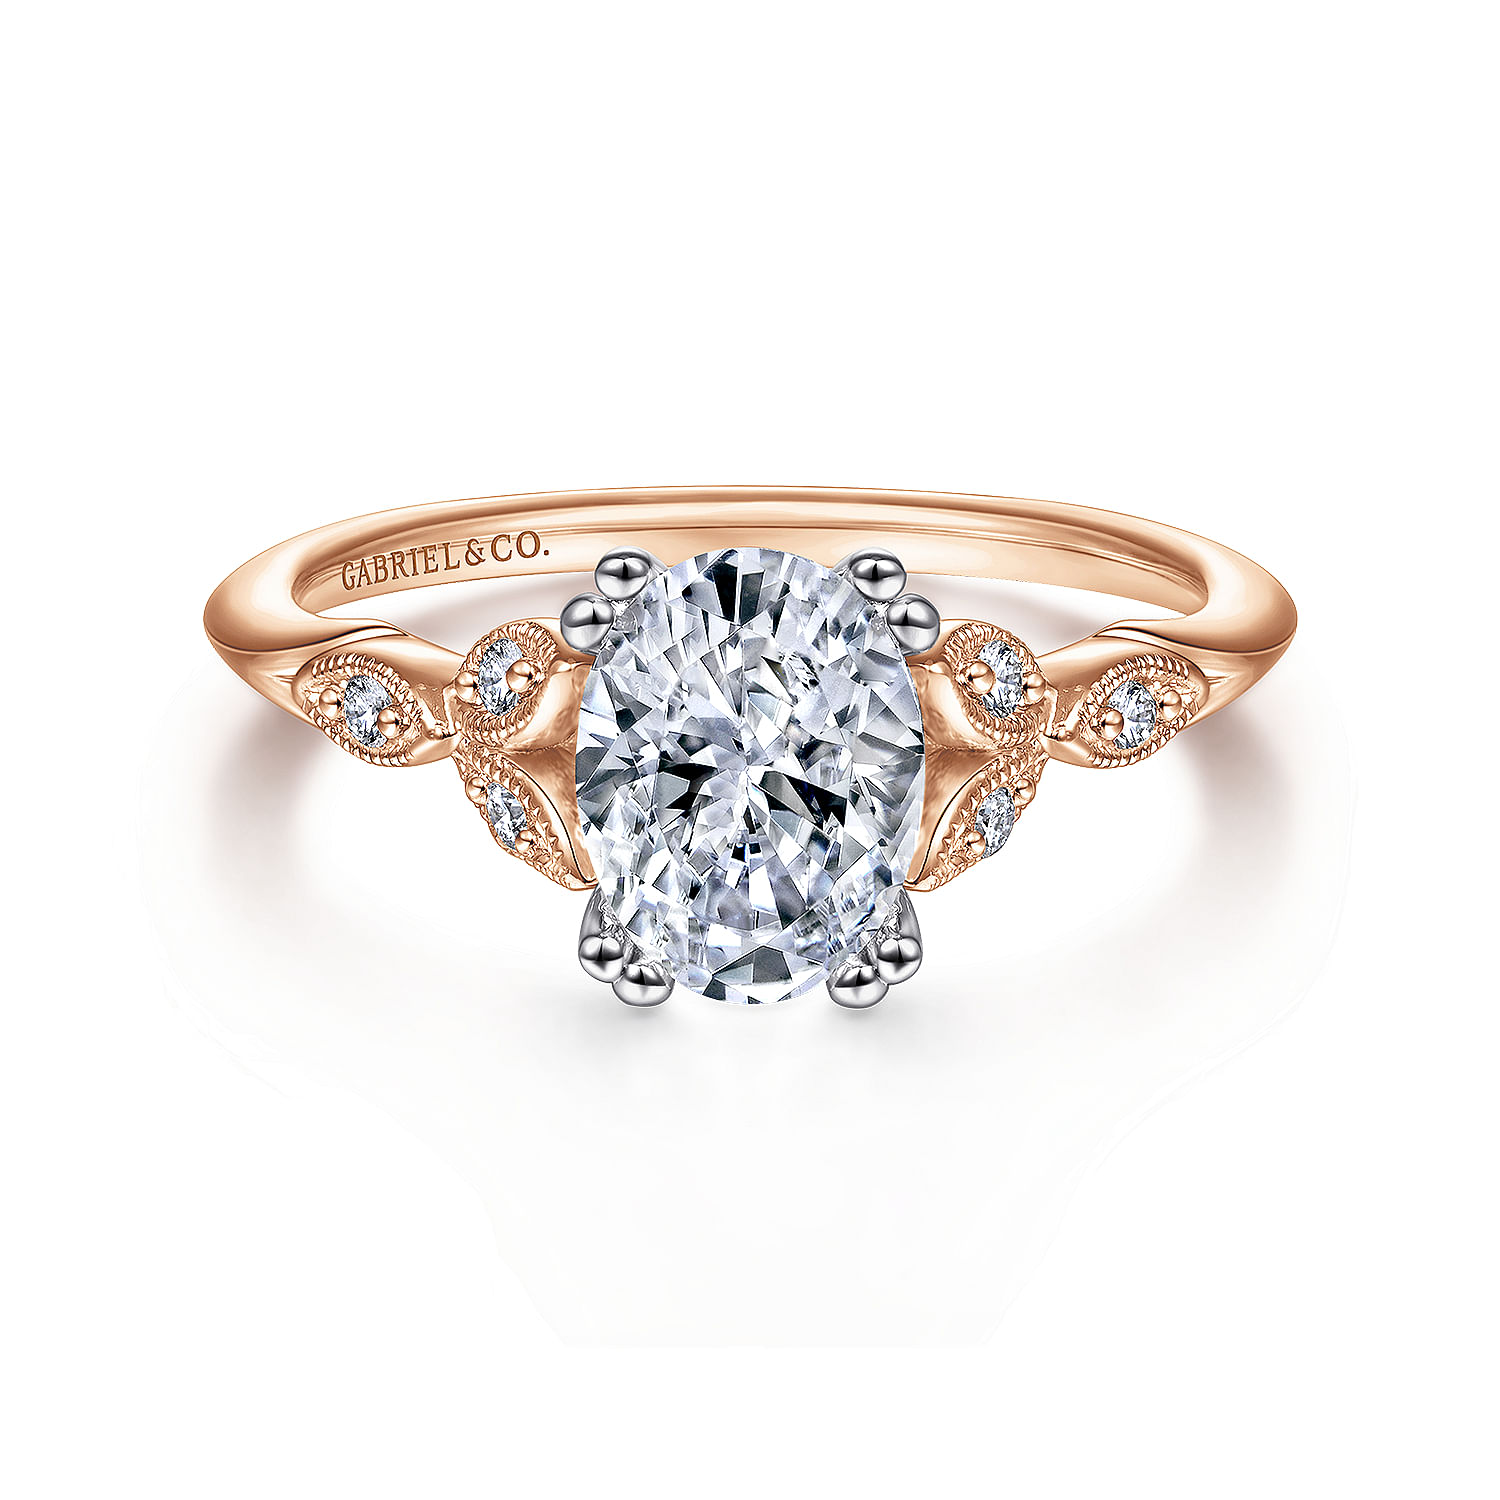 Gabriel - 14K White-Rose Gold Oval Diamond Engagement Ring